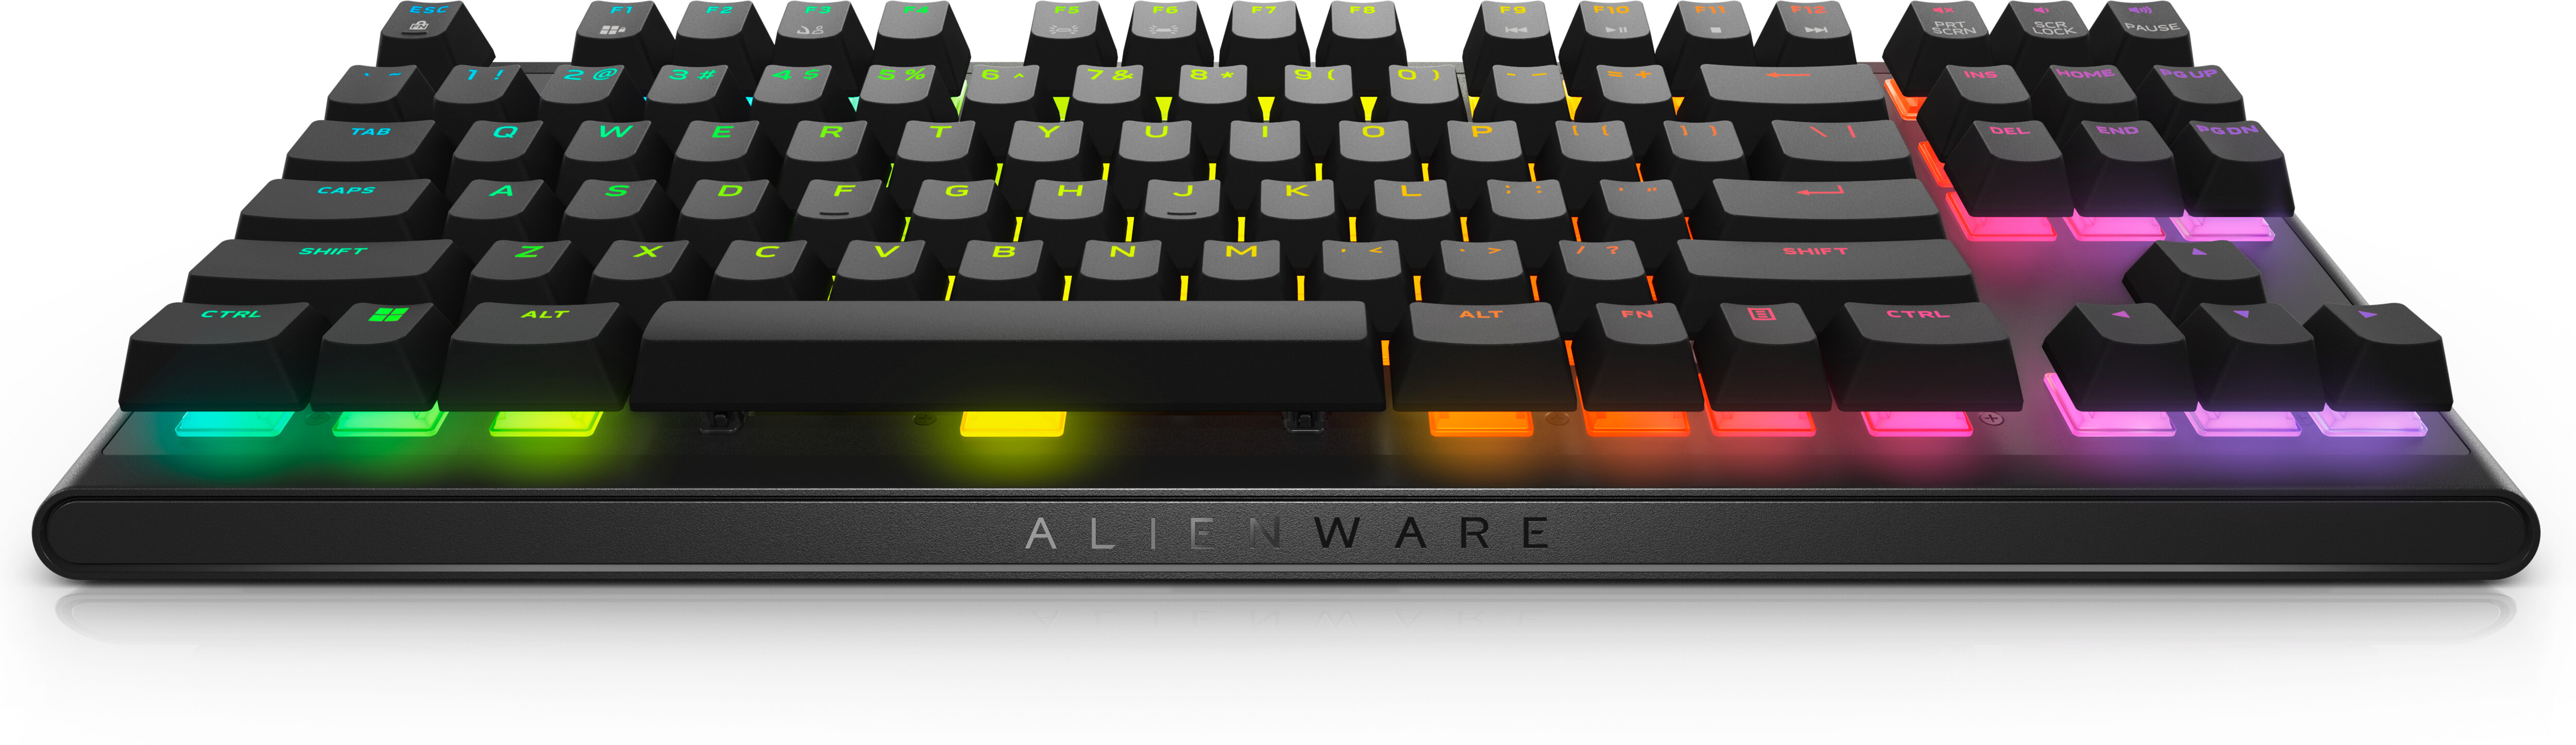 Alienware Gaming Keyboard - Computer | USA